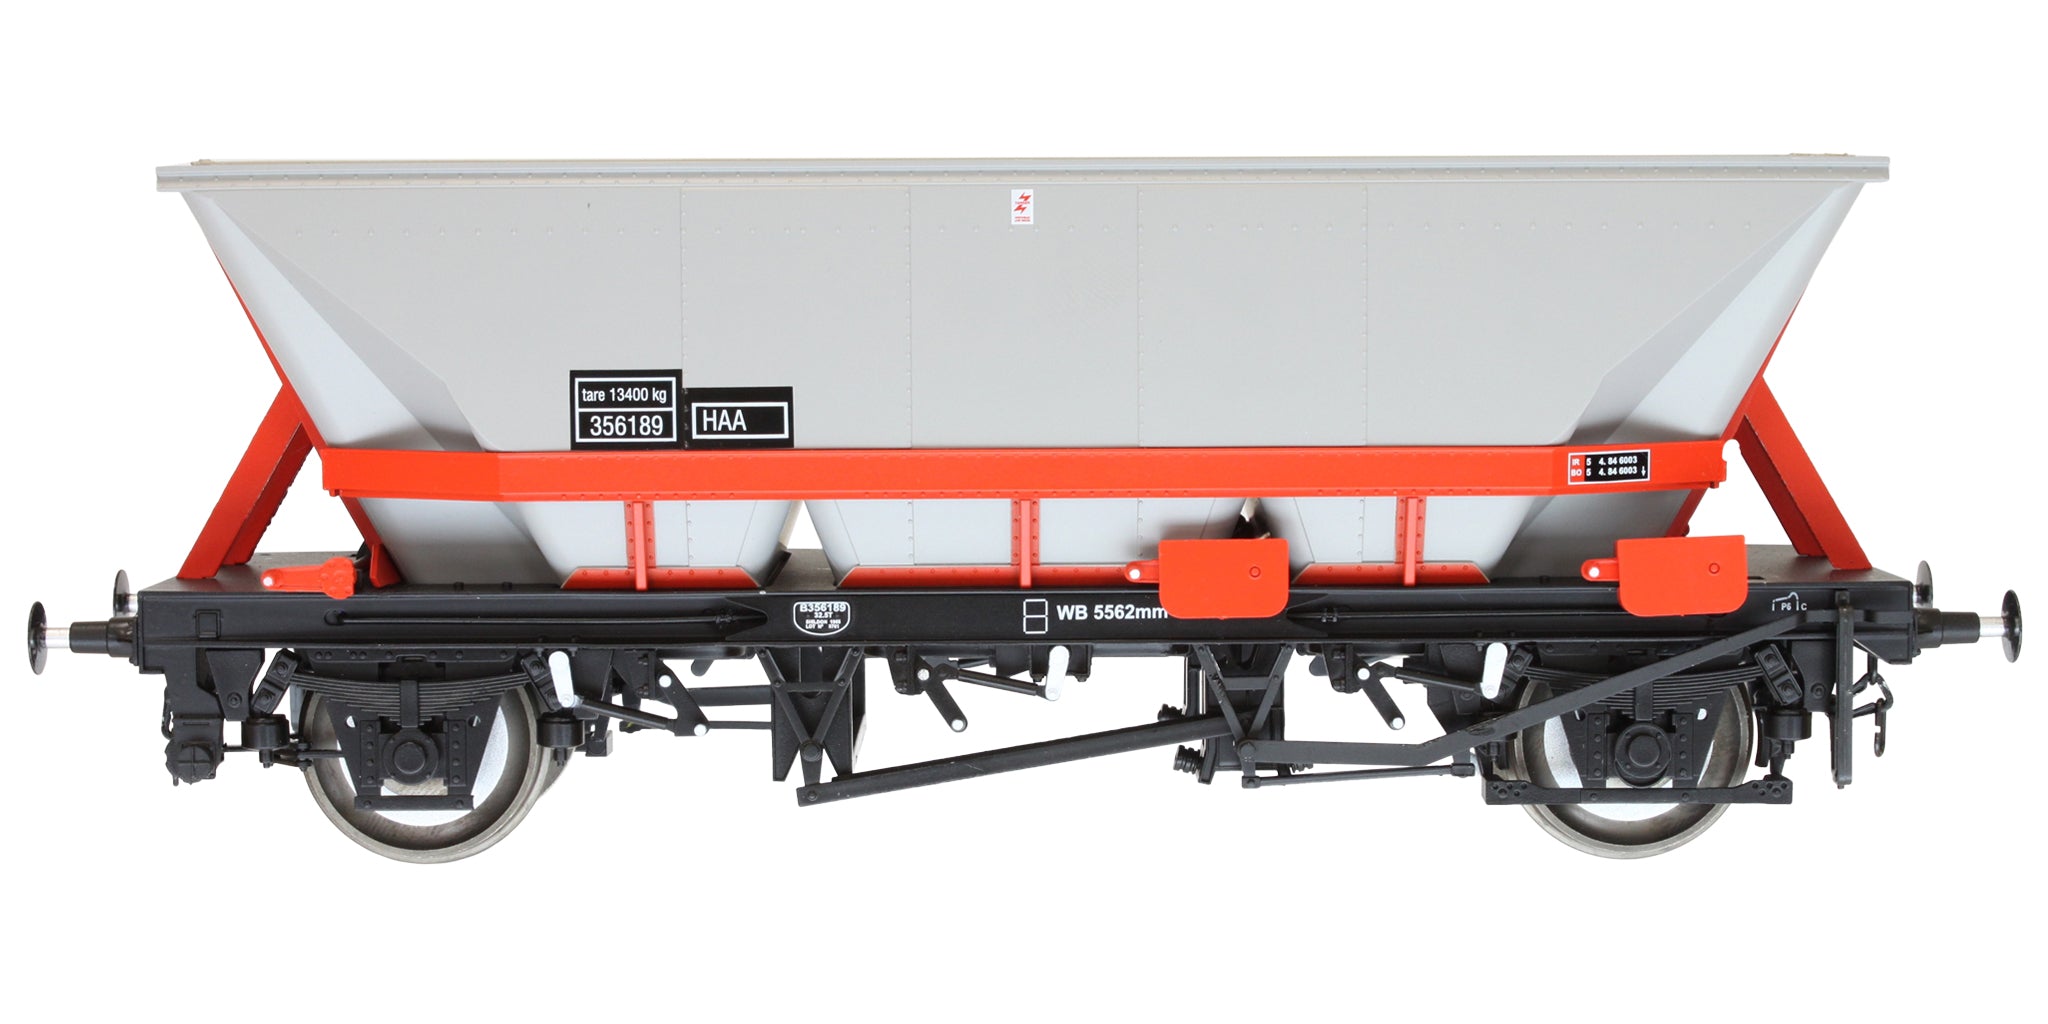 7F-048-011 MGR HAA Coal Wagon (Red Cradle) #356169